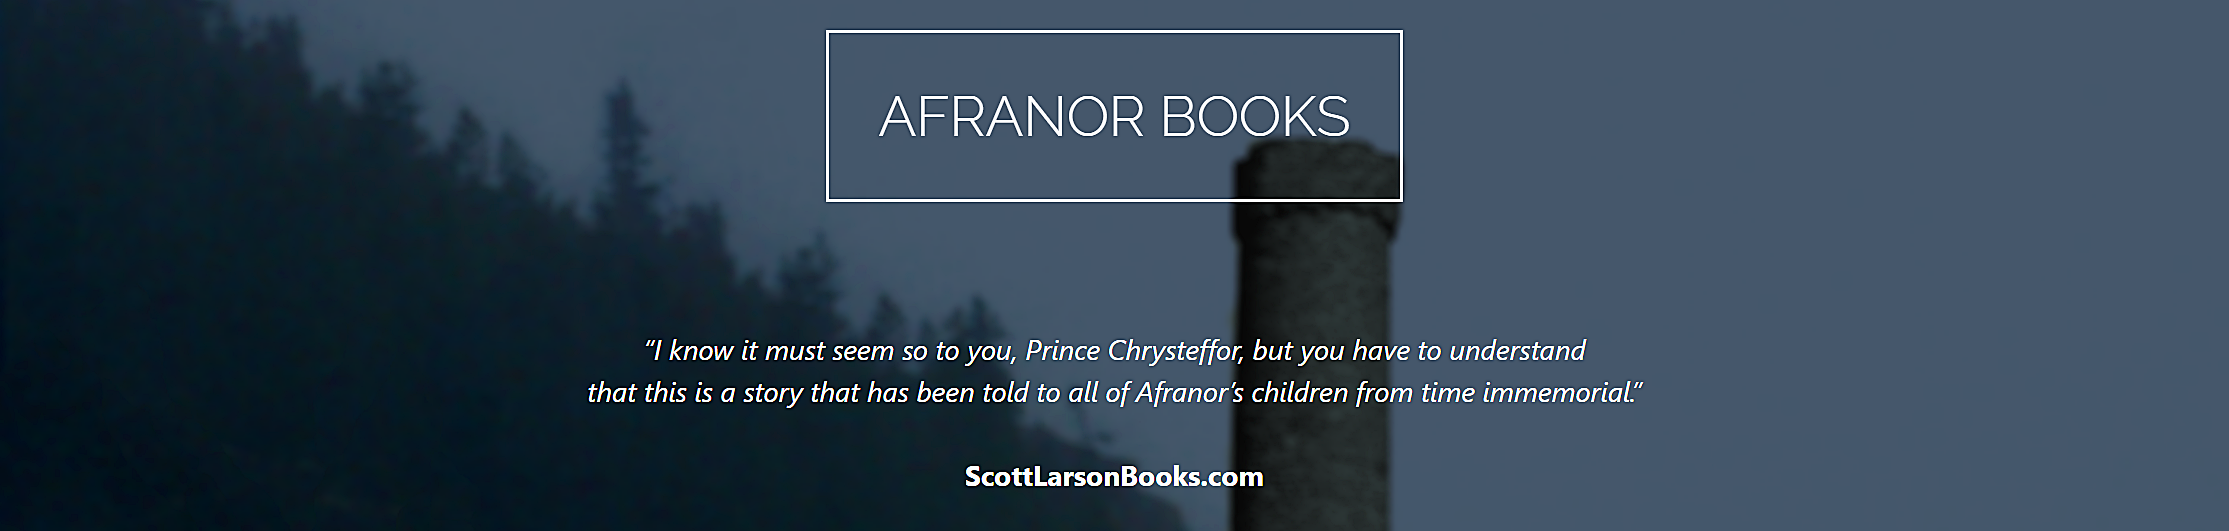 Afranor Books